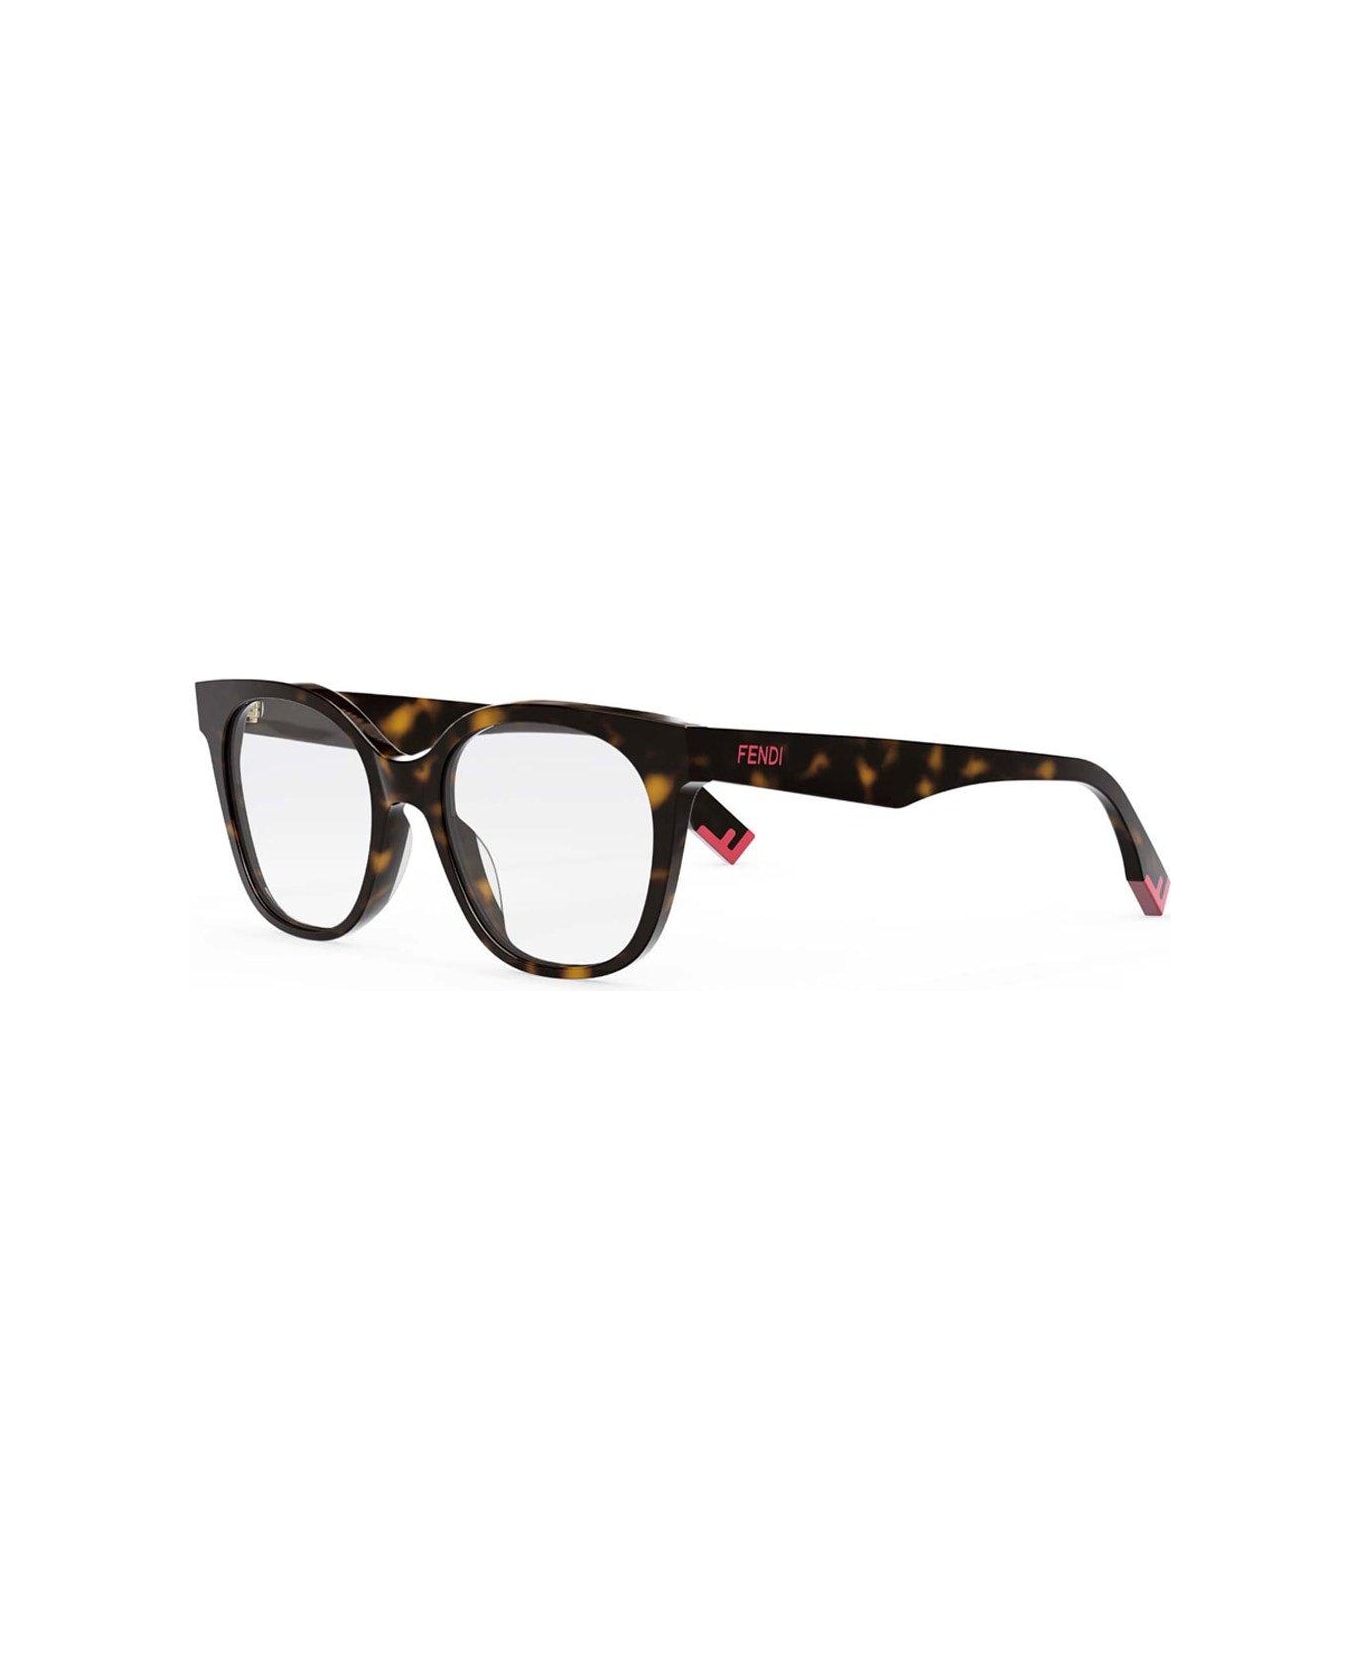 Fendi Eyewear Square-frame Glasses - 052